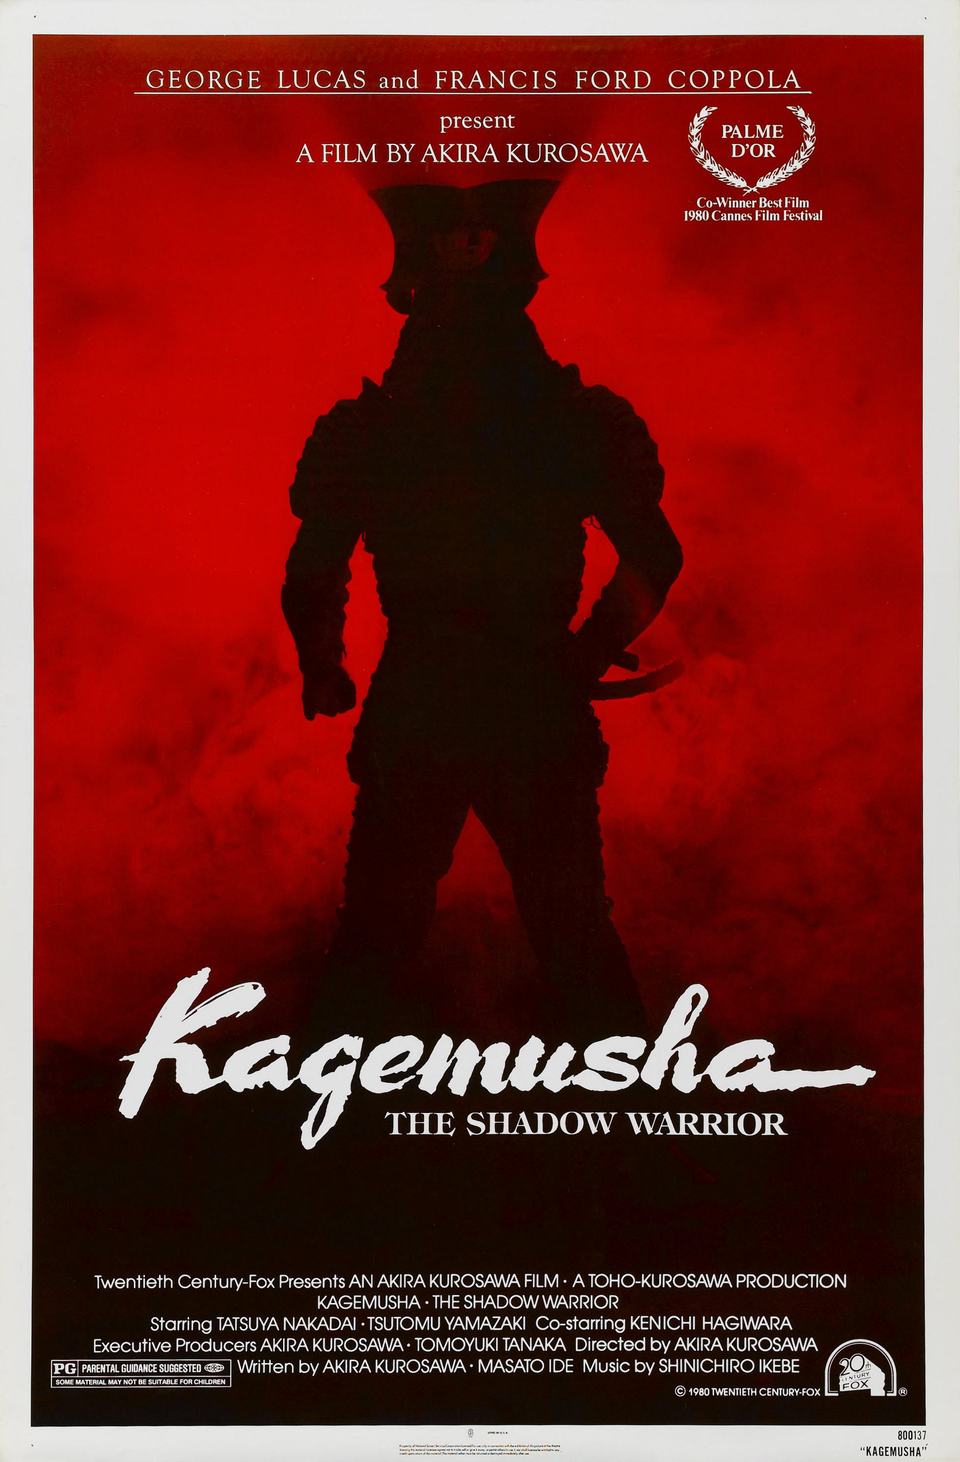 Cartel de Kagemusha, la sombra del guerrero - EE.UU